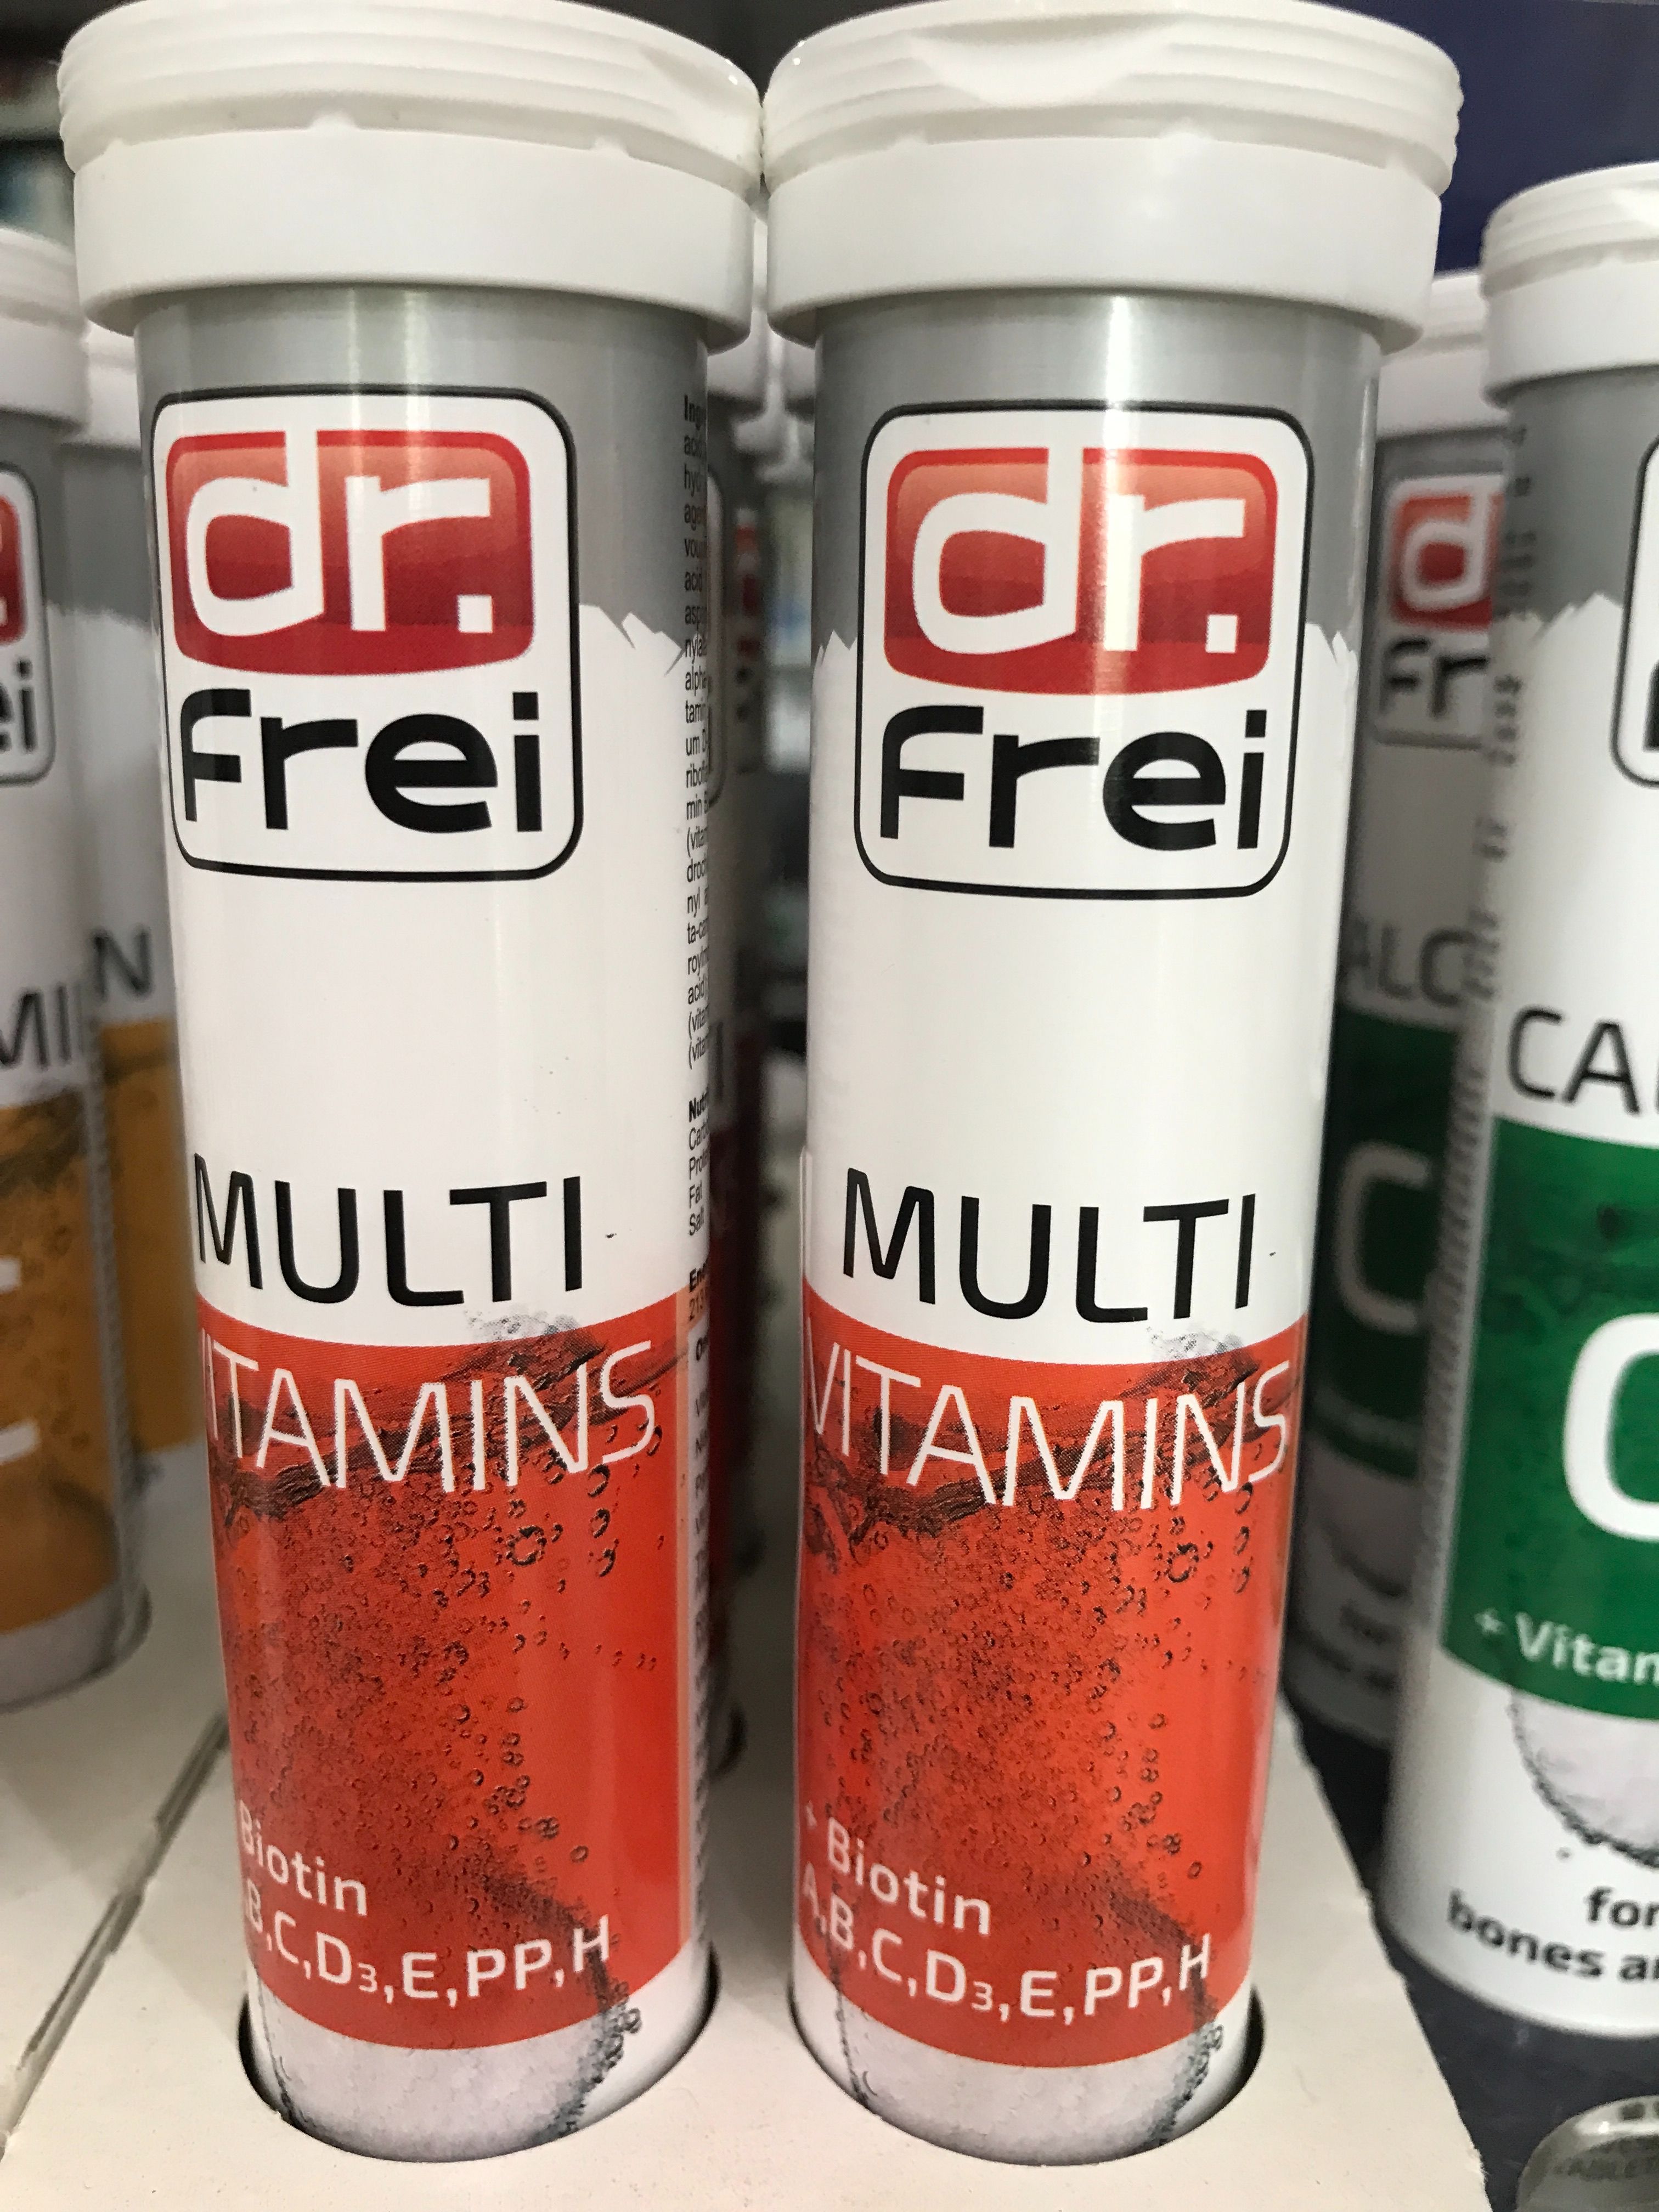 Dr. frei multivitamin